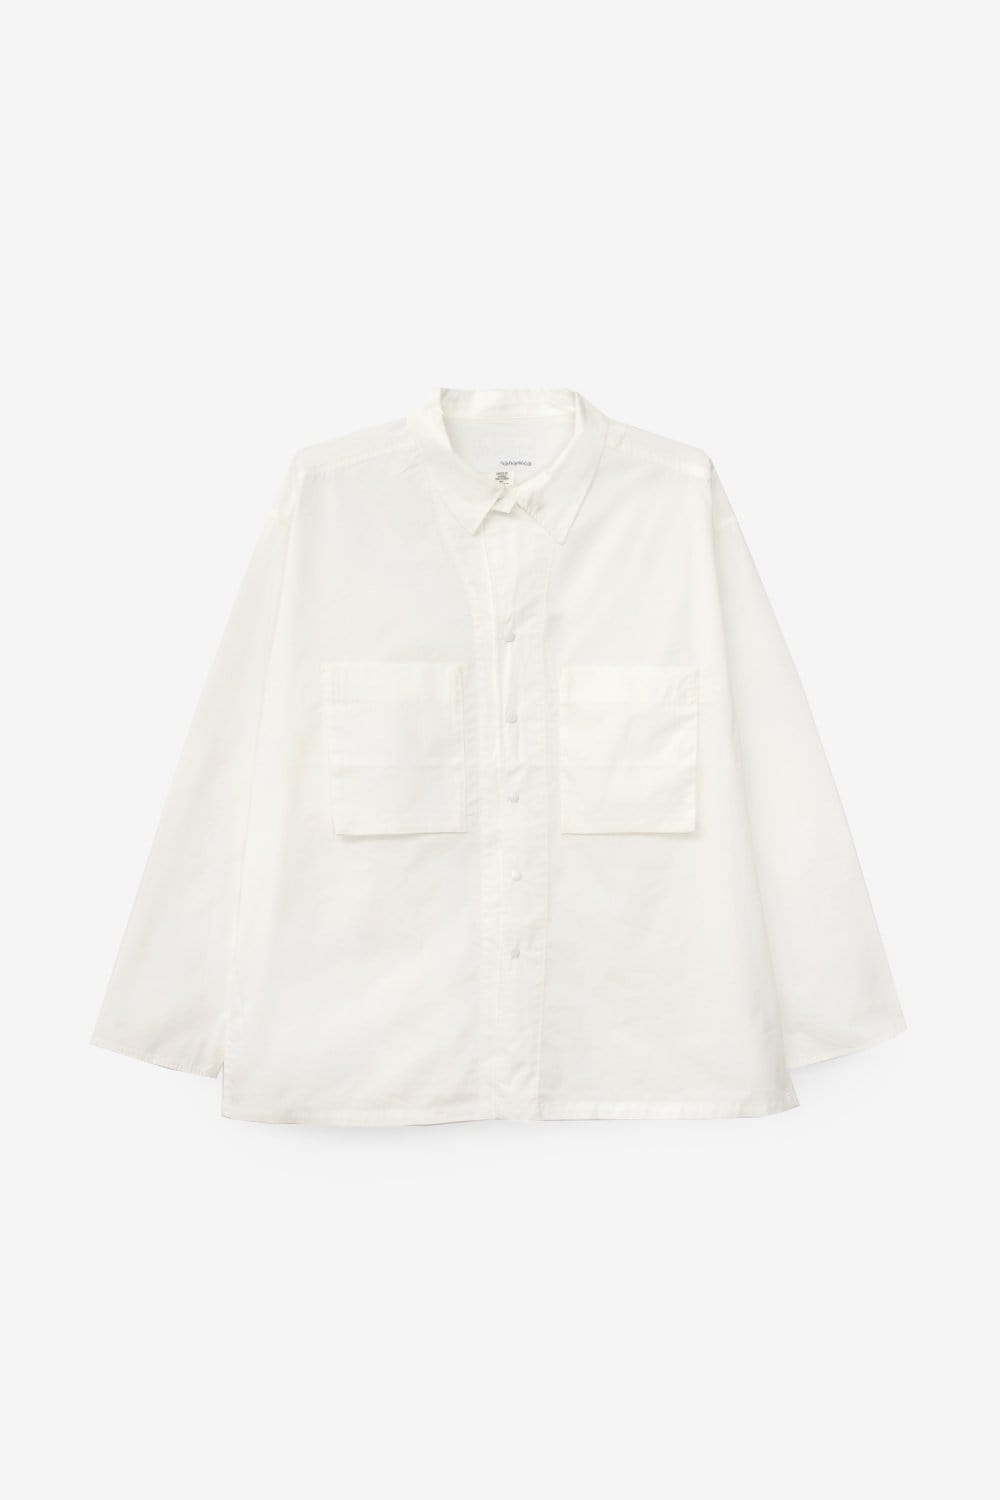 nanamica Shirt Jacket (Off White)